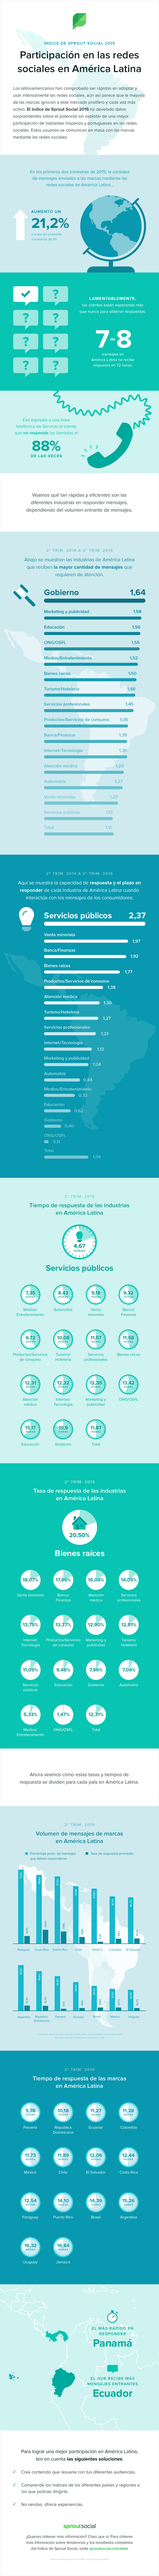 infografía-latinoamerica-marketing-redes-sociales